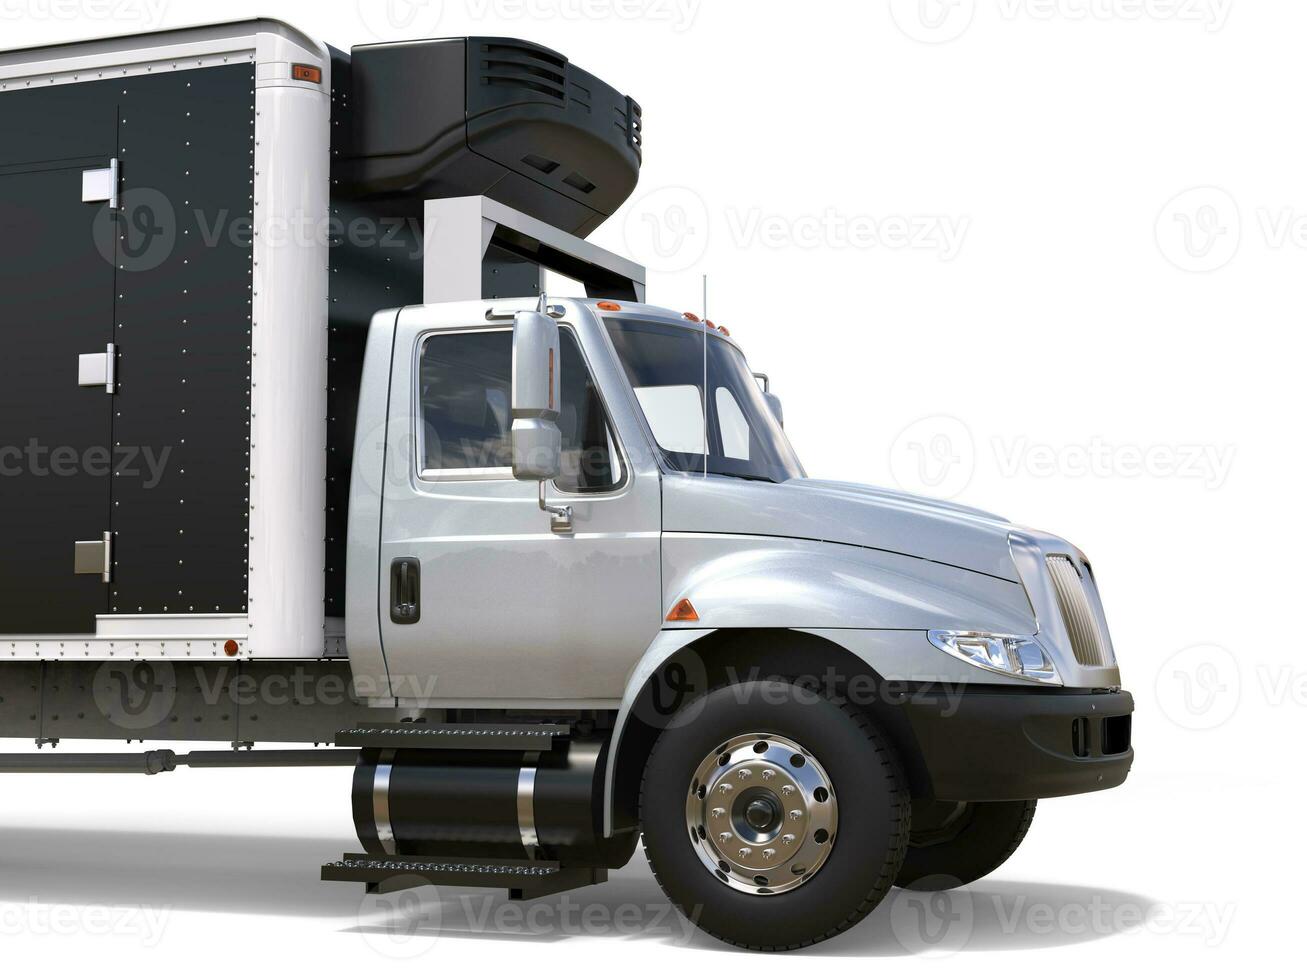 argento frigorifero camion - davanti avvicinamento tagliare tiro foto